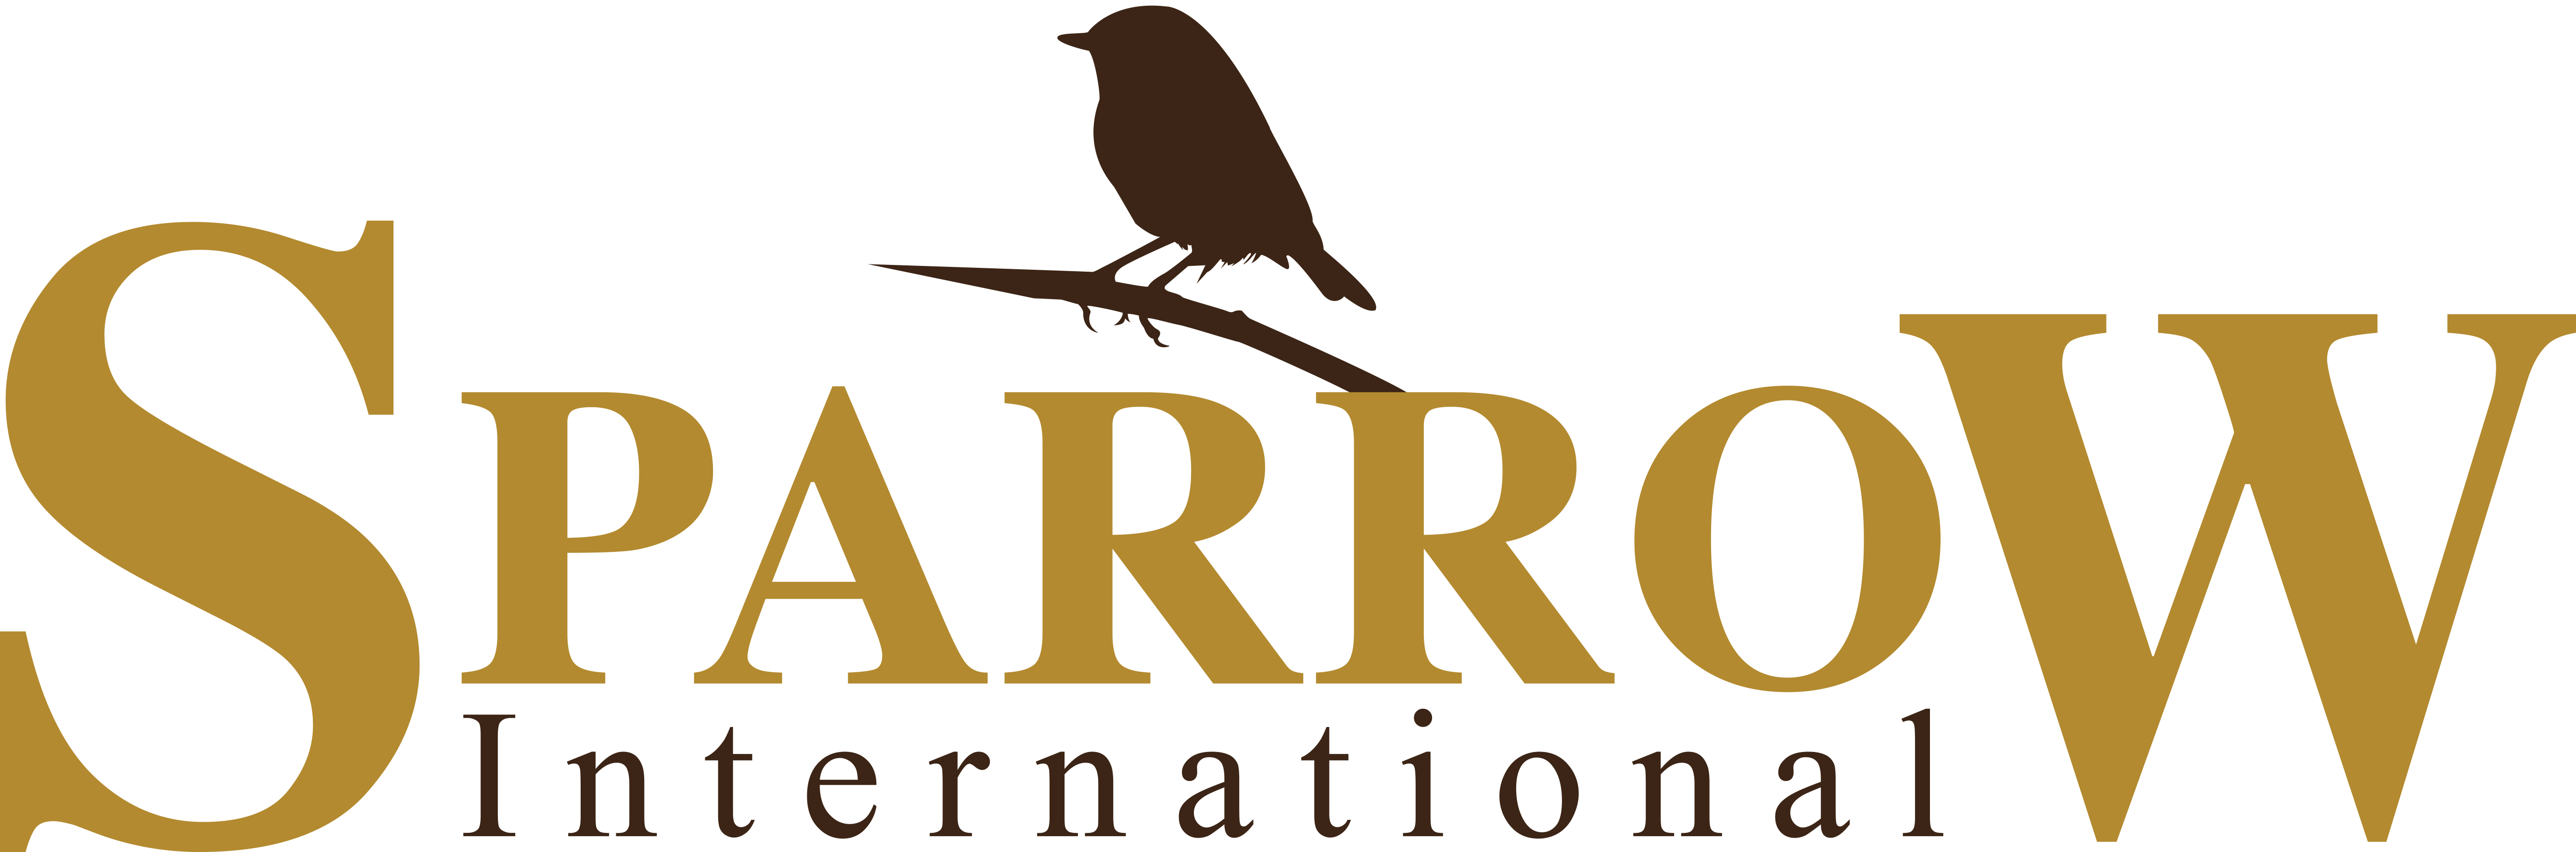 Sparrow international - Automatic coffee machine supplier Dubai and UAE